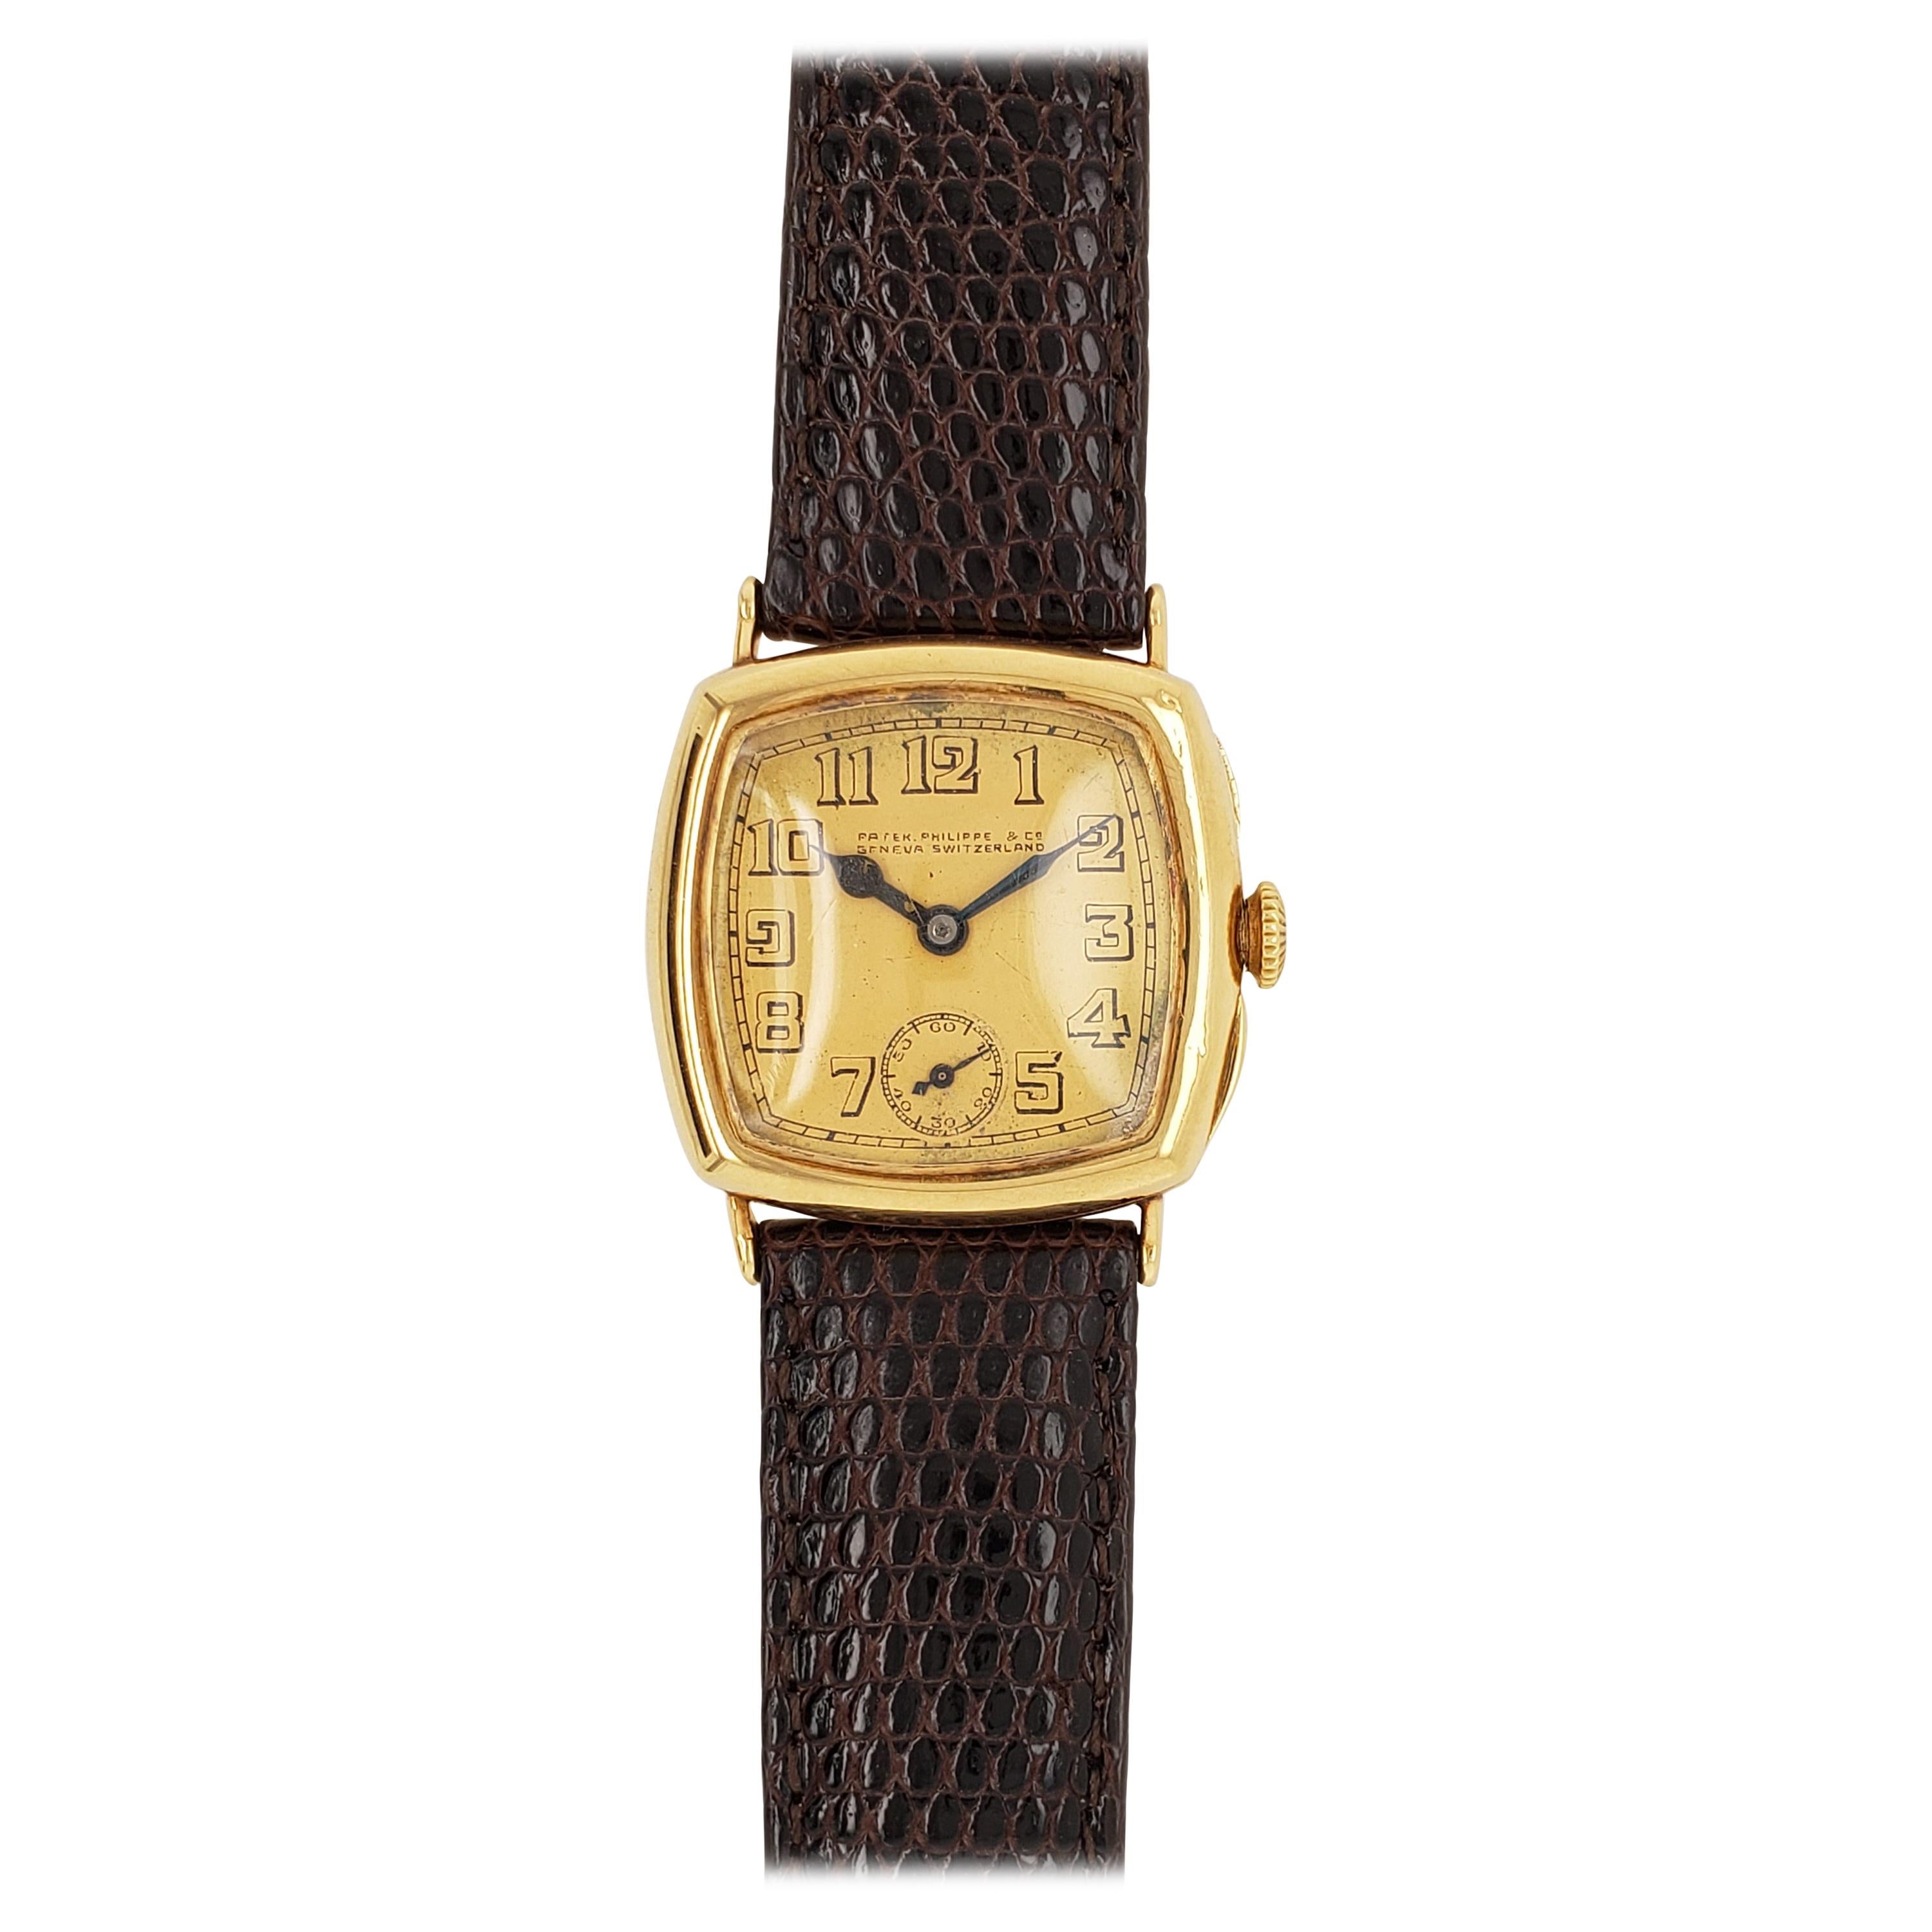 Art Deco Style Patek Philippe 18 Karat Yellow Gold Wristwatch, circa 1920s